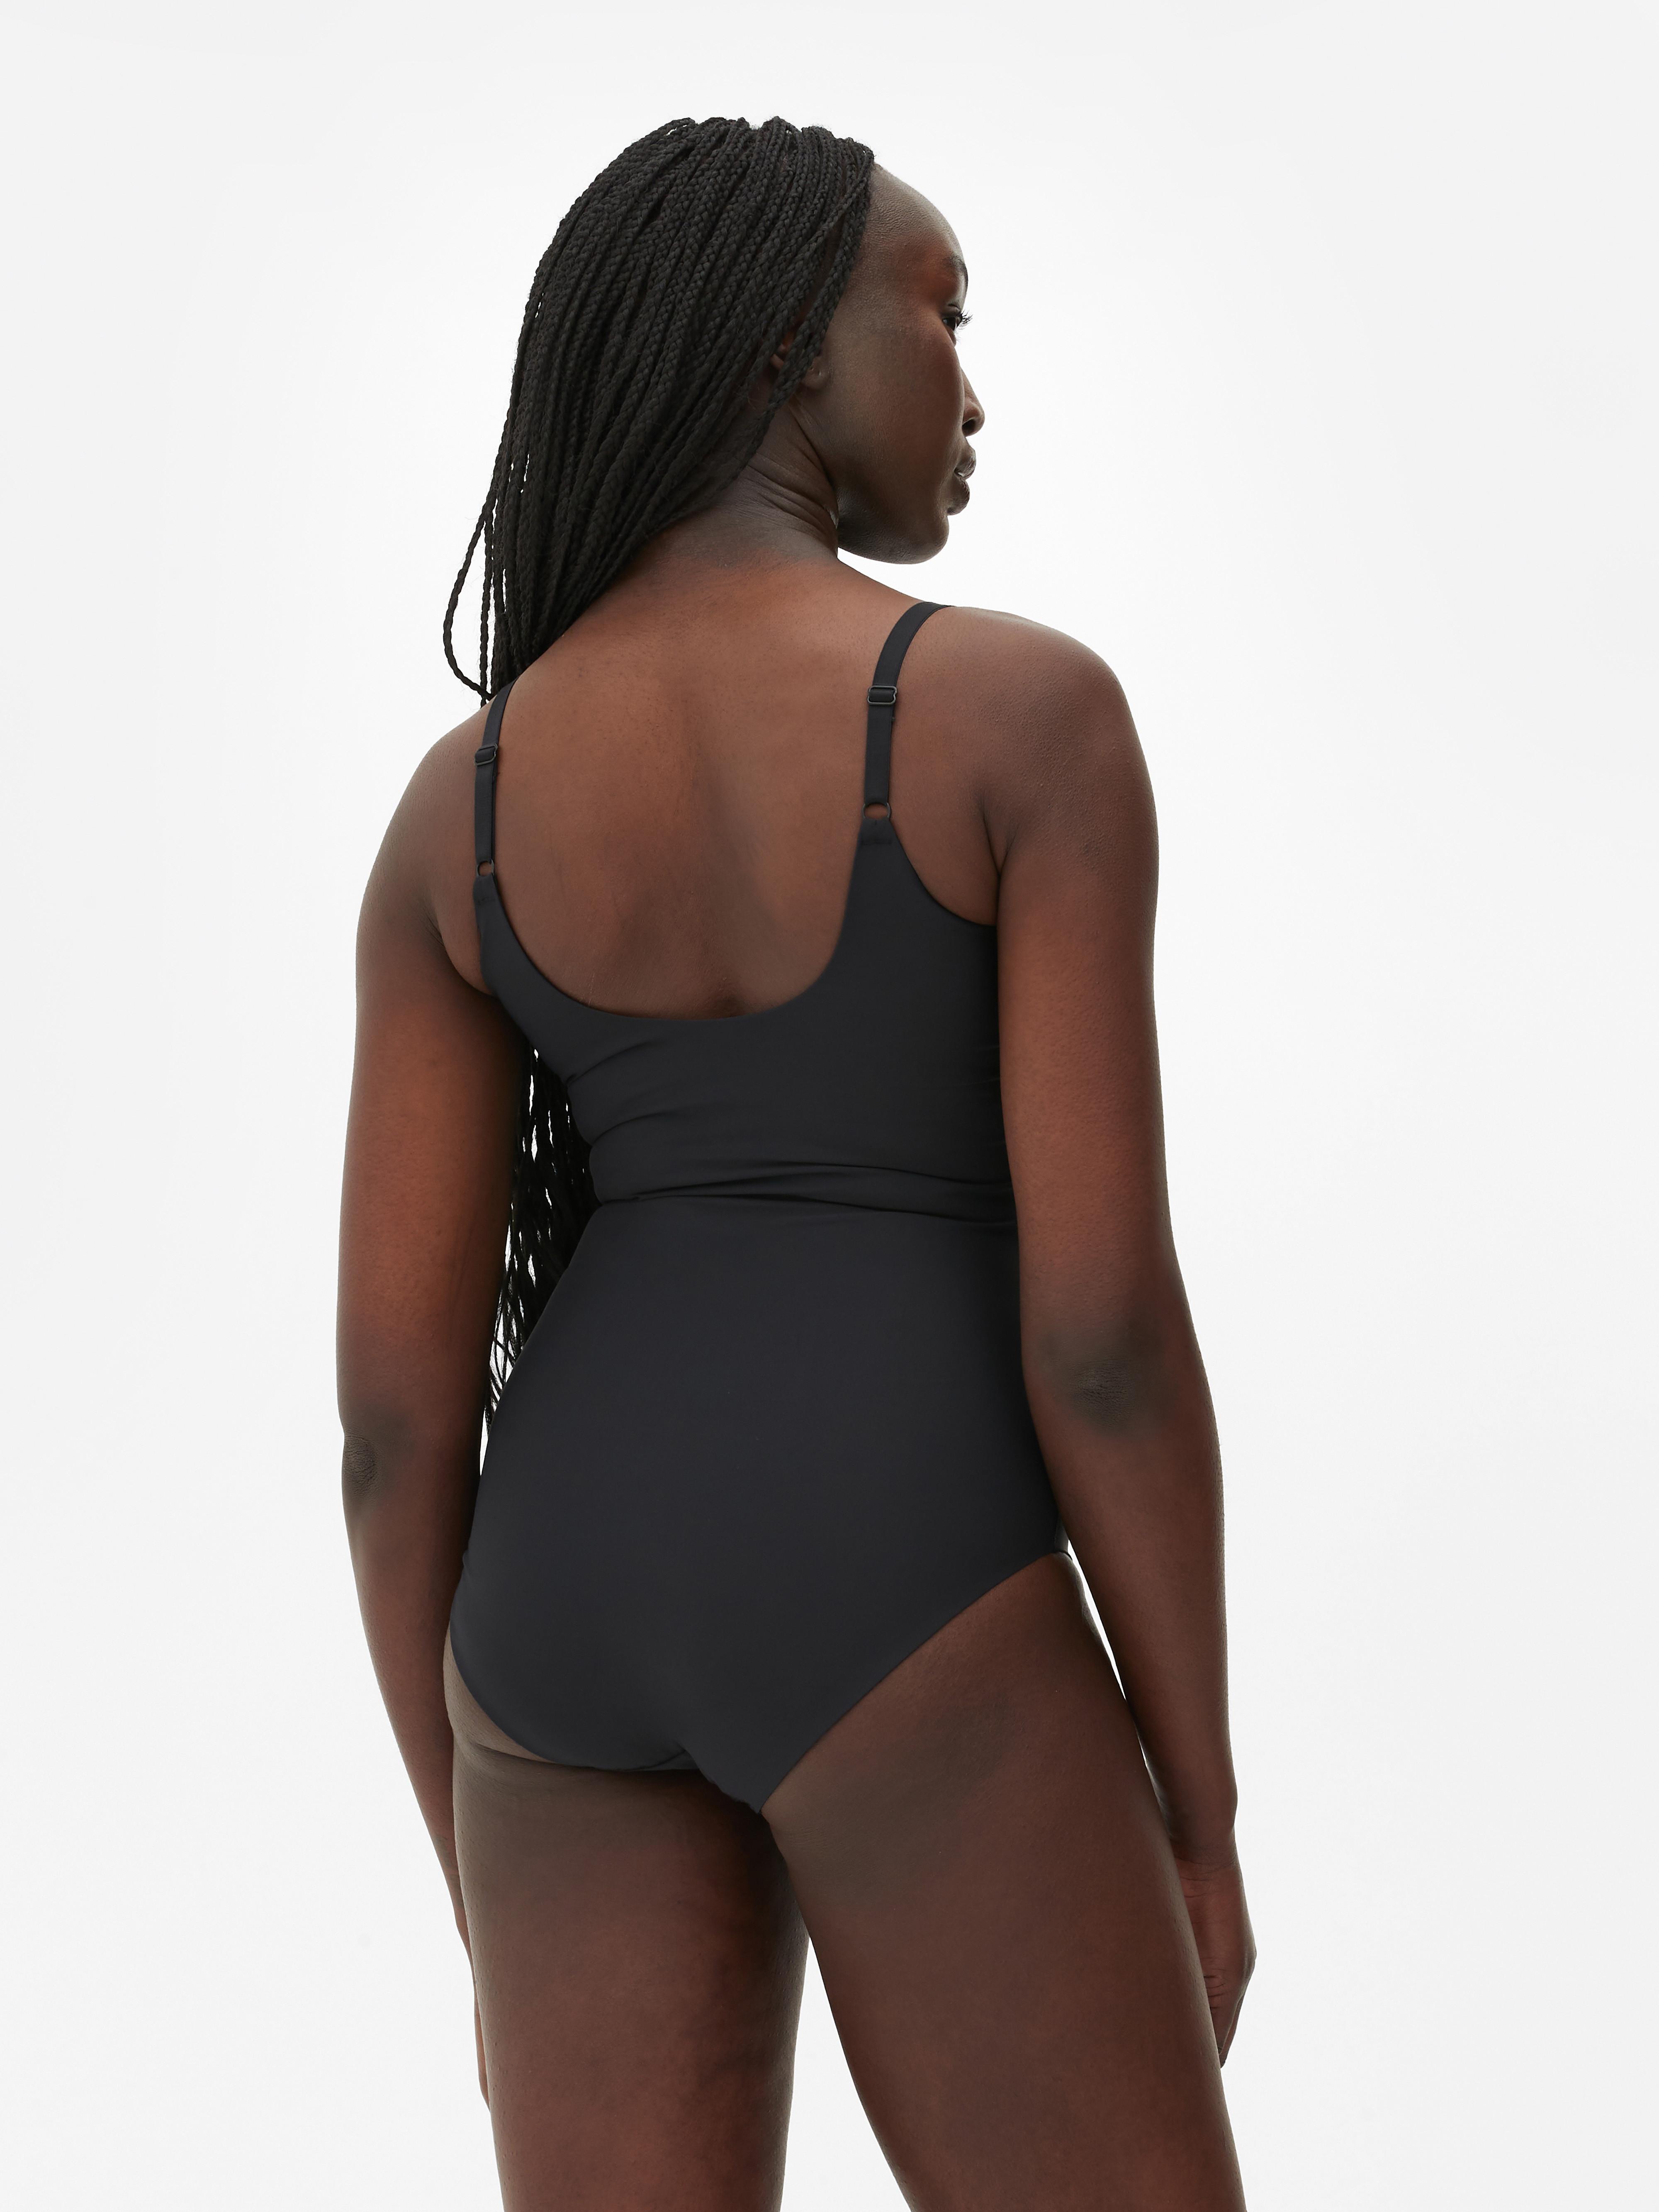 PRIMARK FIRM CONTROL Shaping Body Bodysuit Shapewear M Black Slimming  £15.00 - PicClick UK